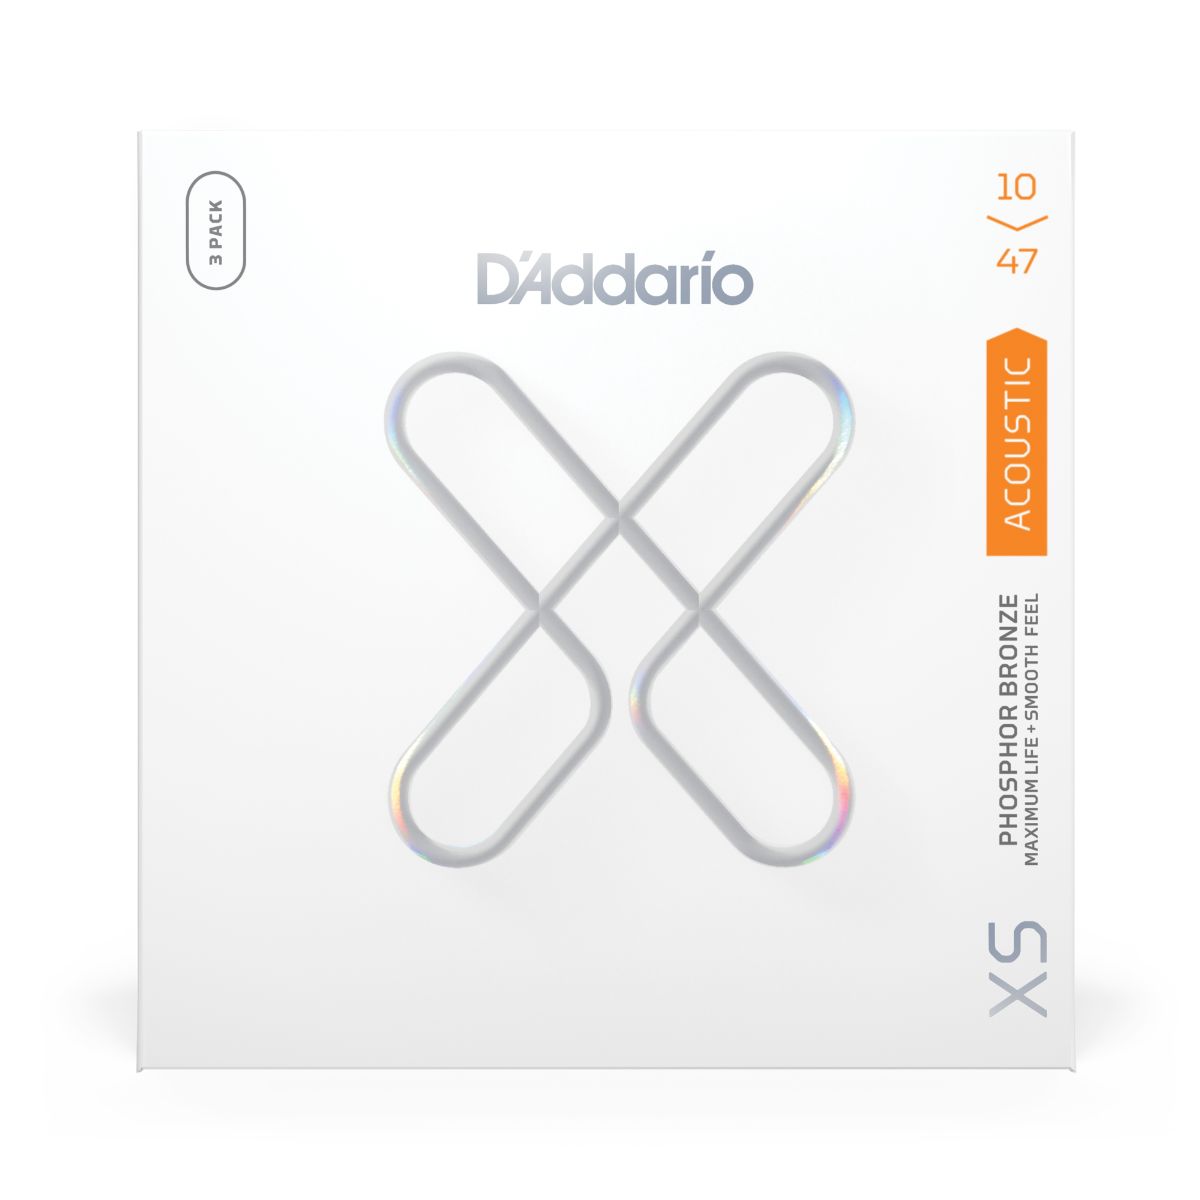 D'Addario XS 80/20ブロンズ エクストラライト 010-047 XSABR1047-3P 【 ダダリオ アコースティックギター弦  3パックセット 】